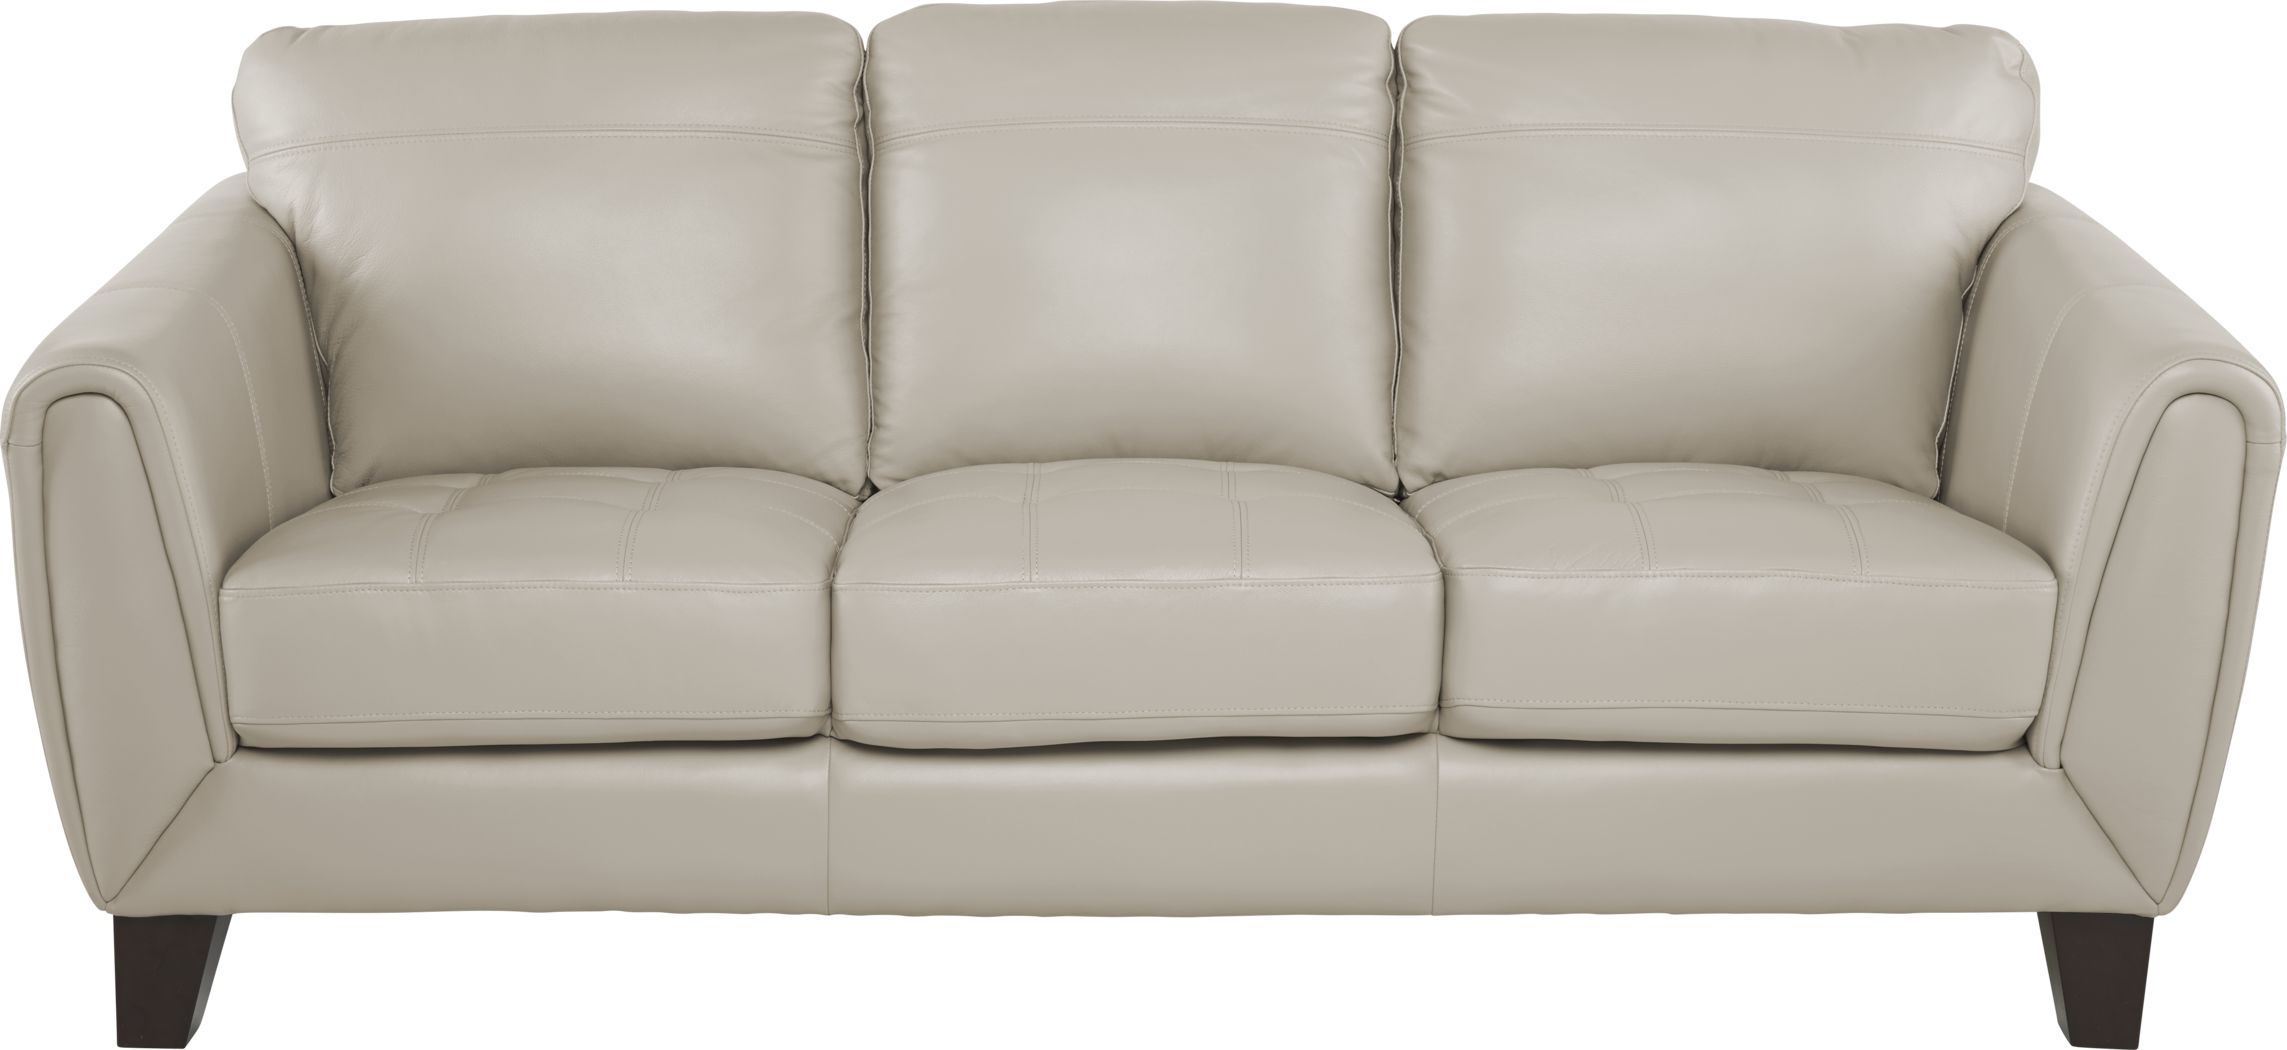 livorno beige leather sofa